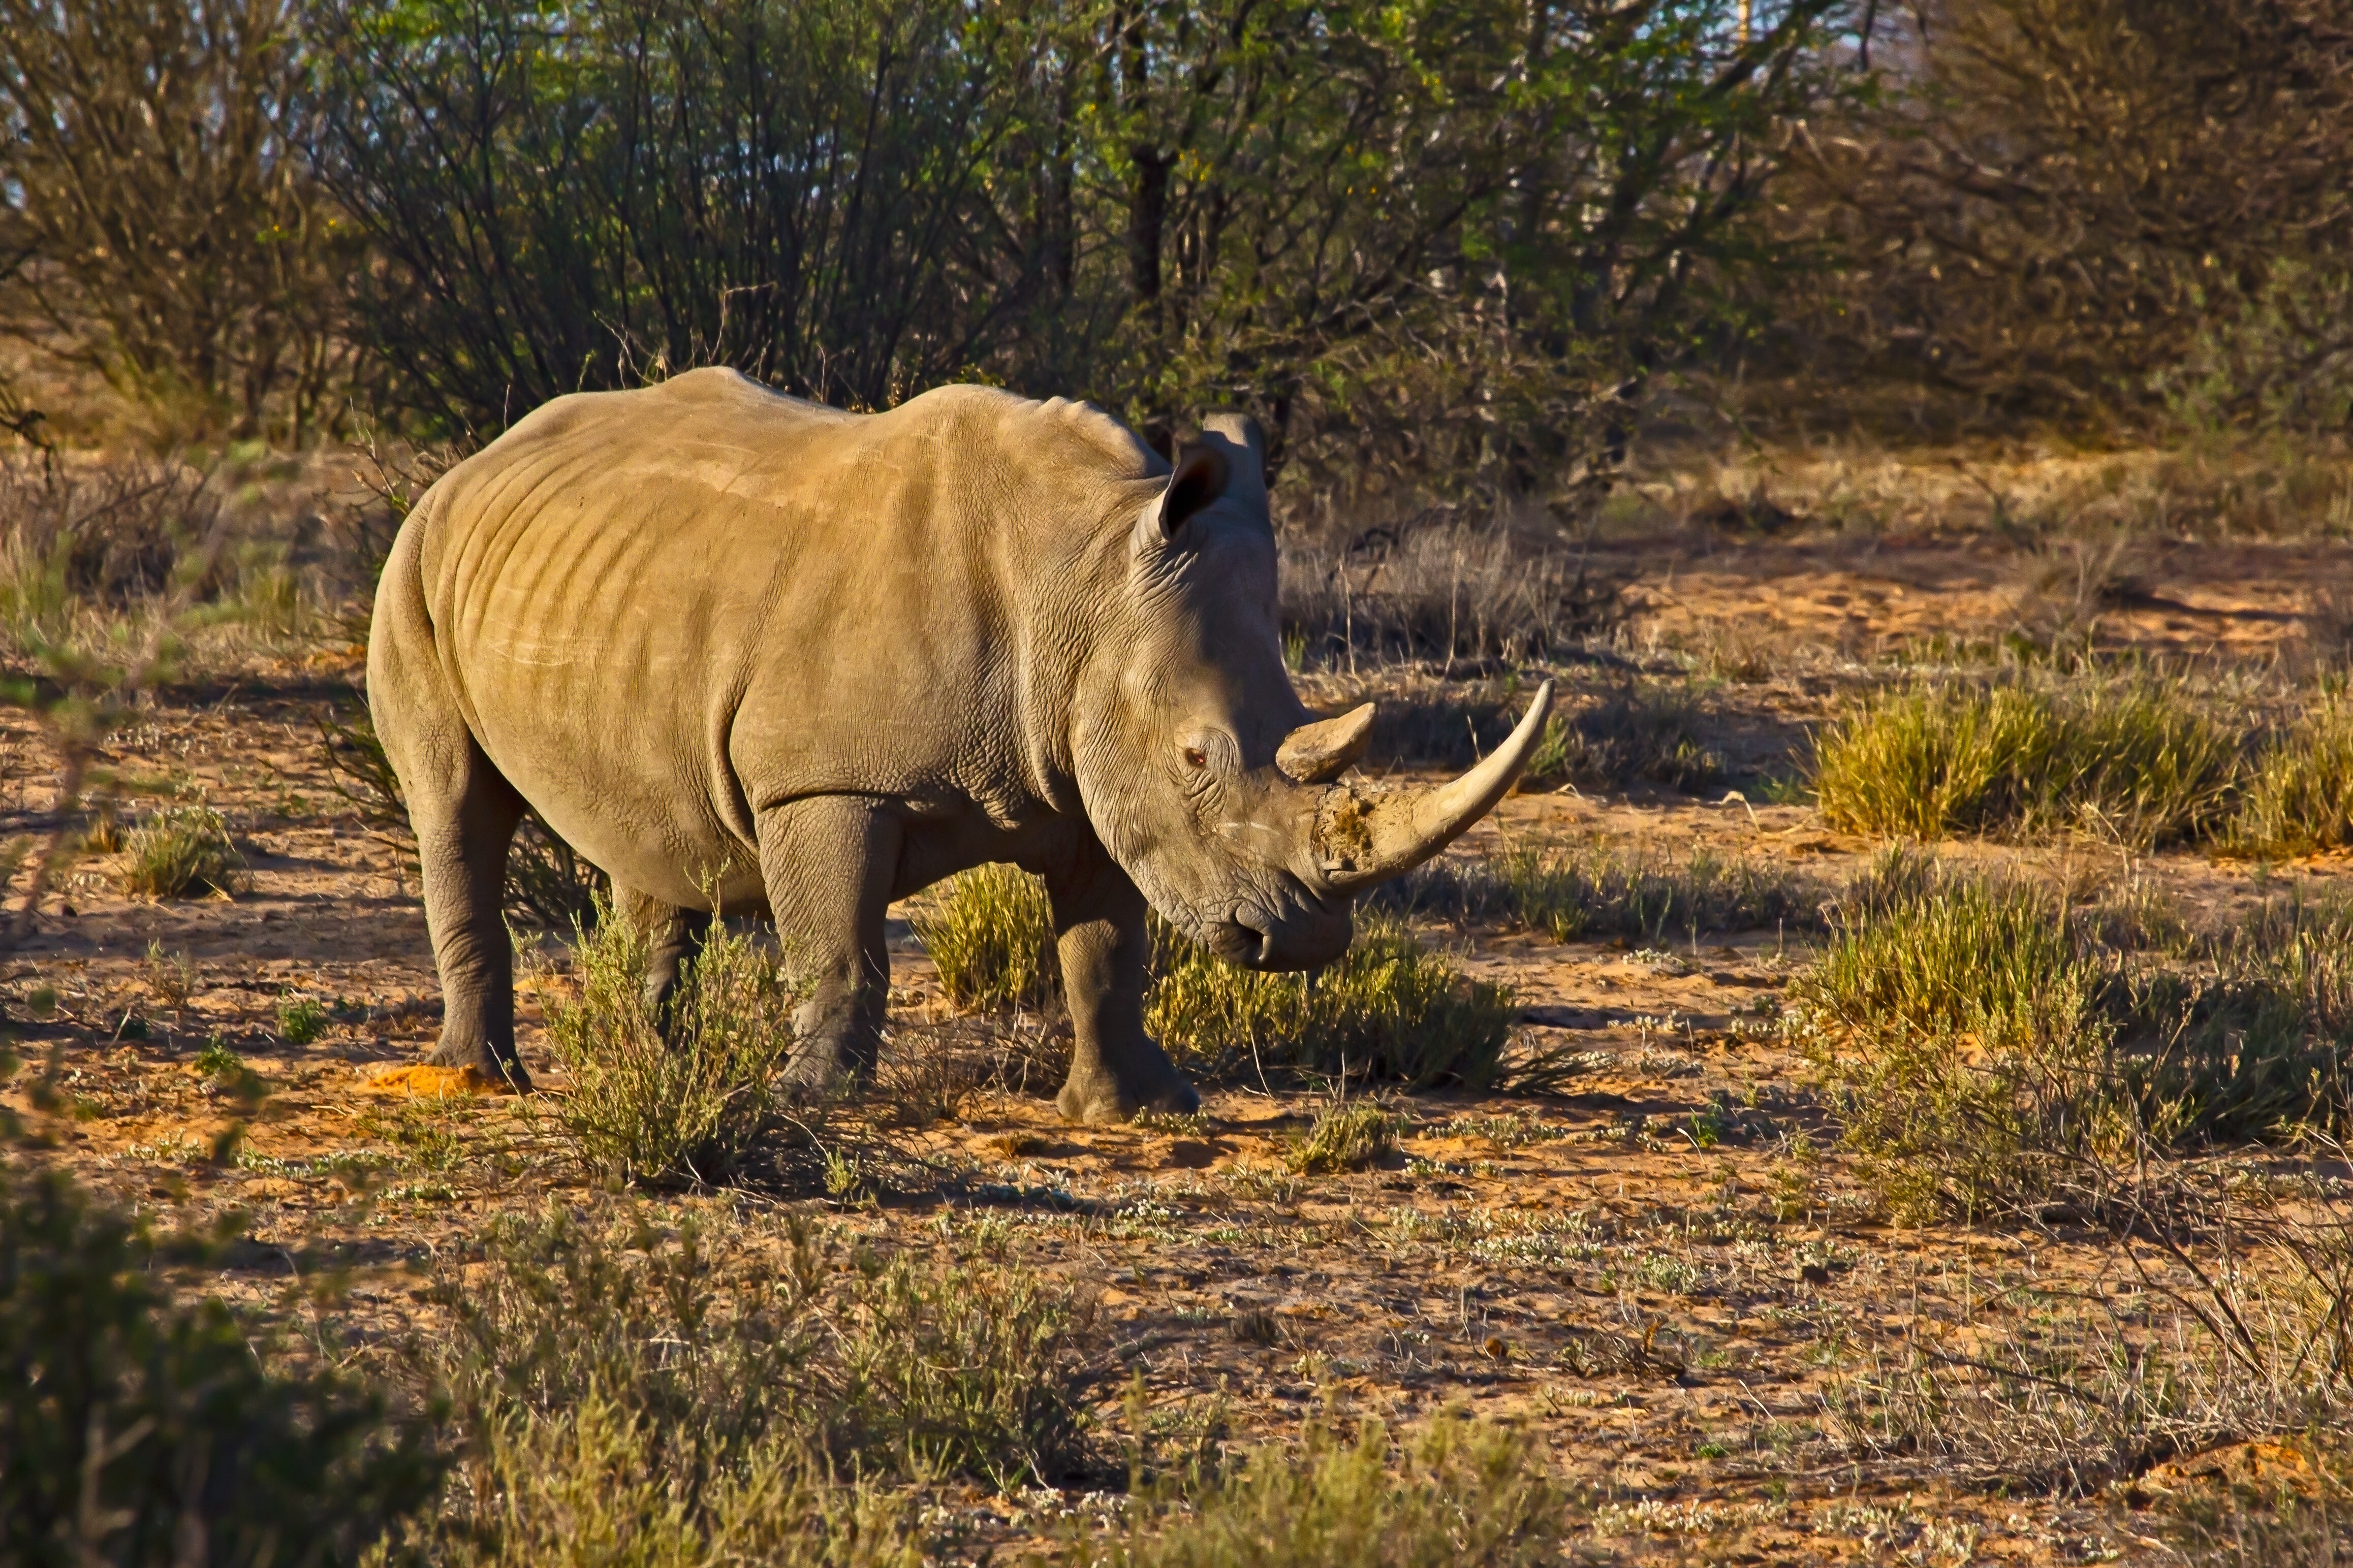 A white rhinoceros in Botswana. Photo: Shutterstock